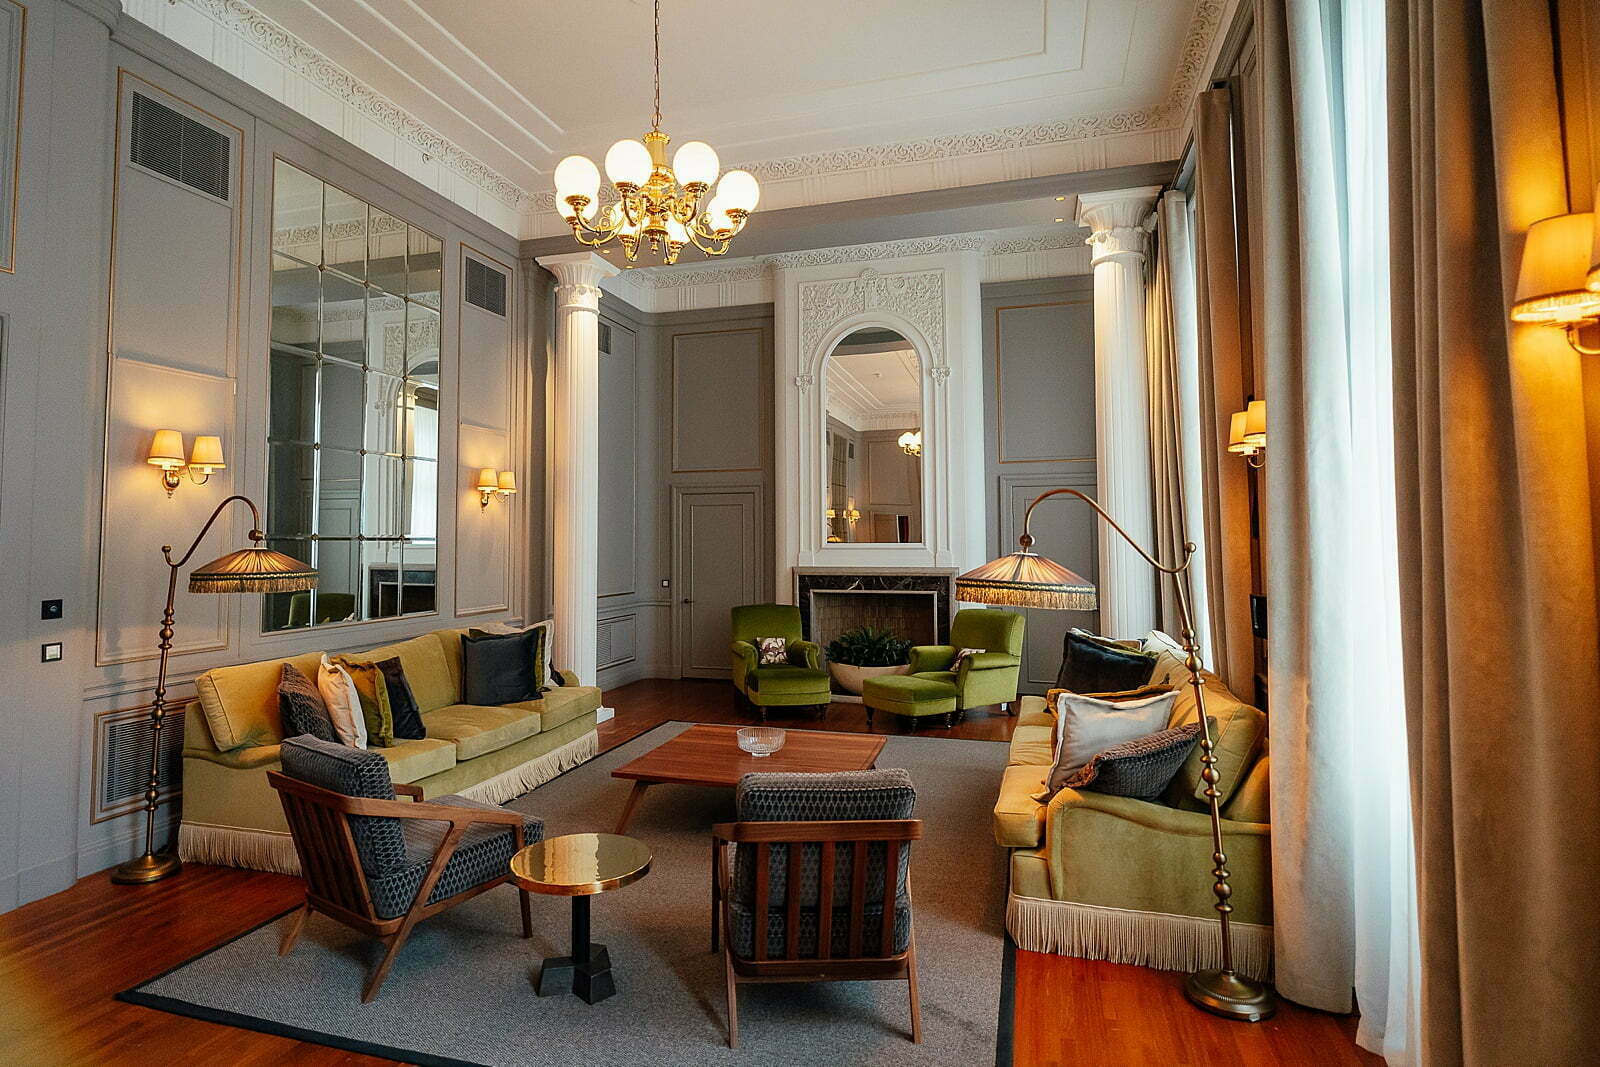 cheval edinburgh grand interior suite panelled walls velvet sofas chaise lounge ornate coving